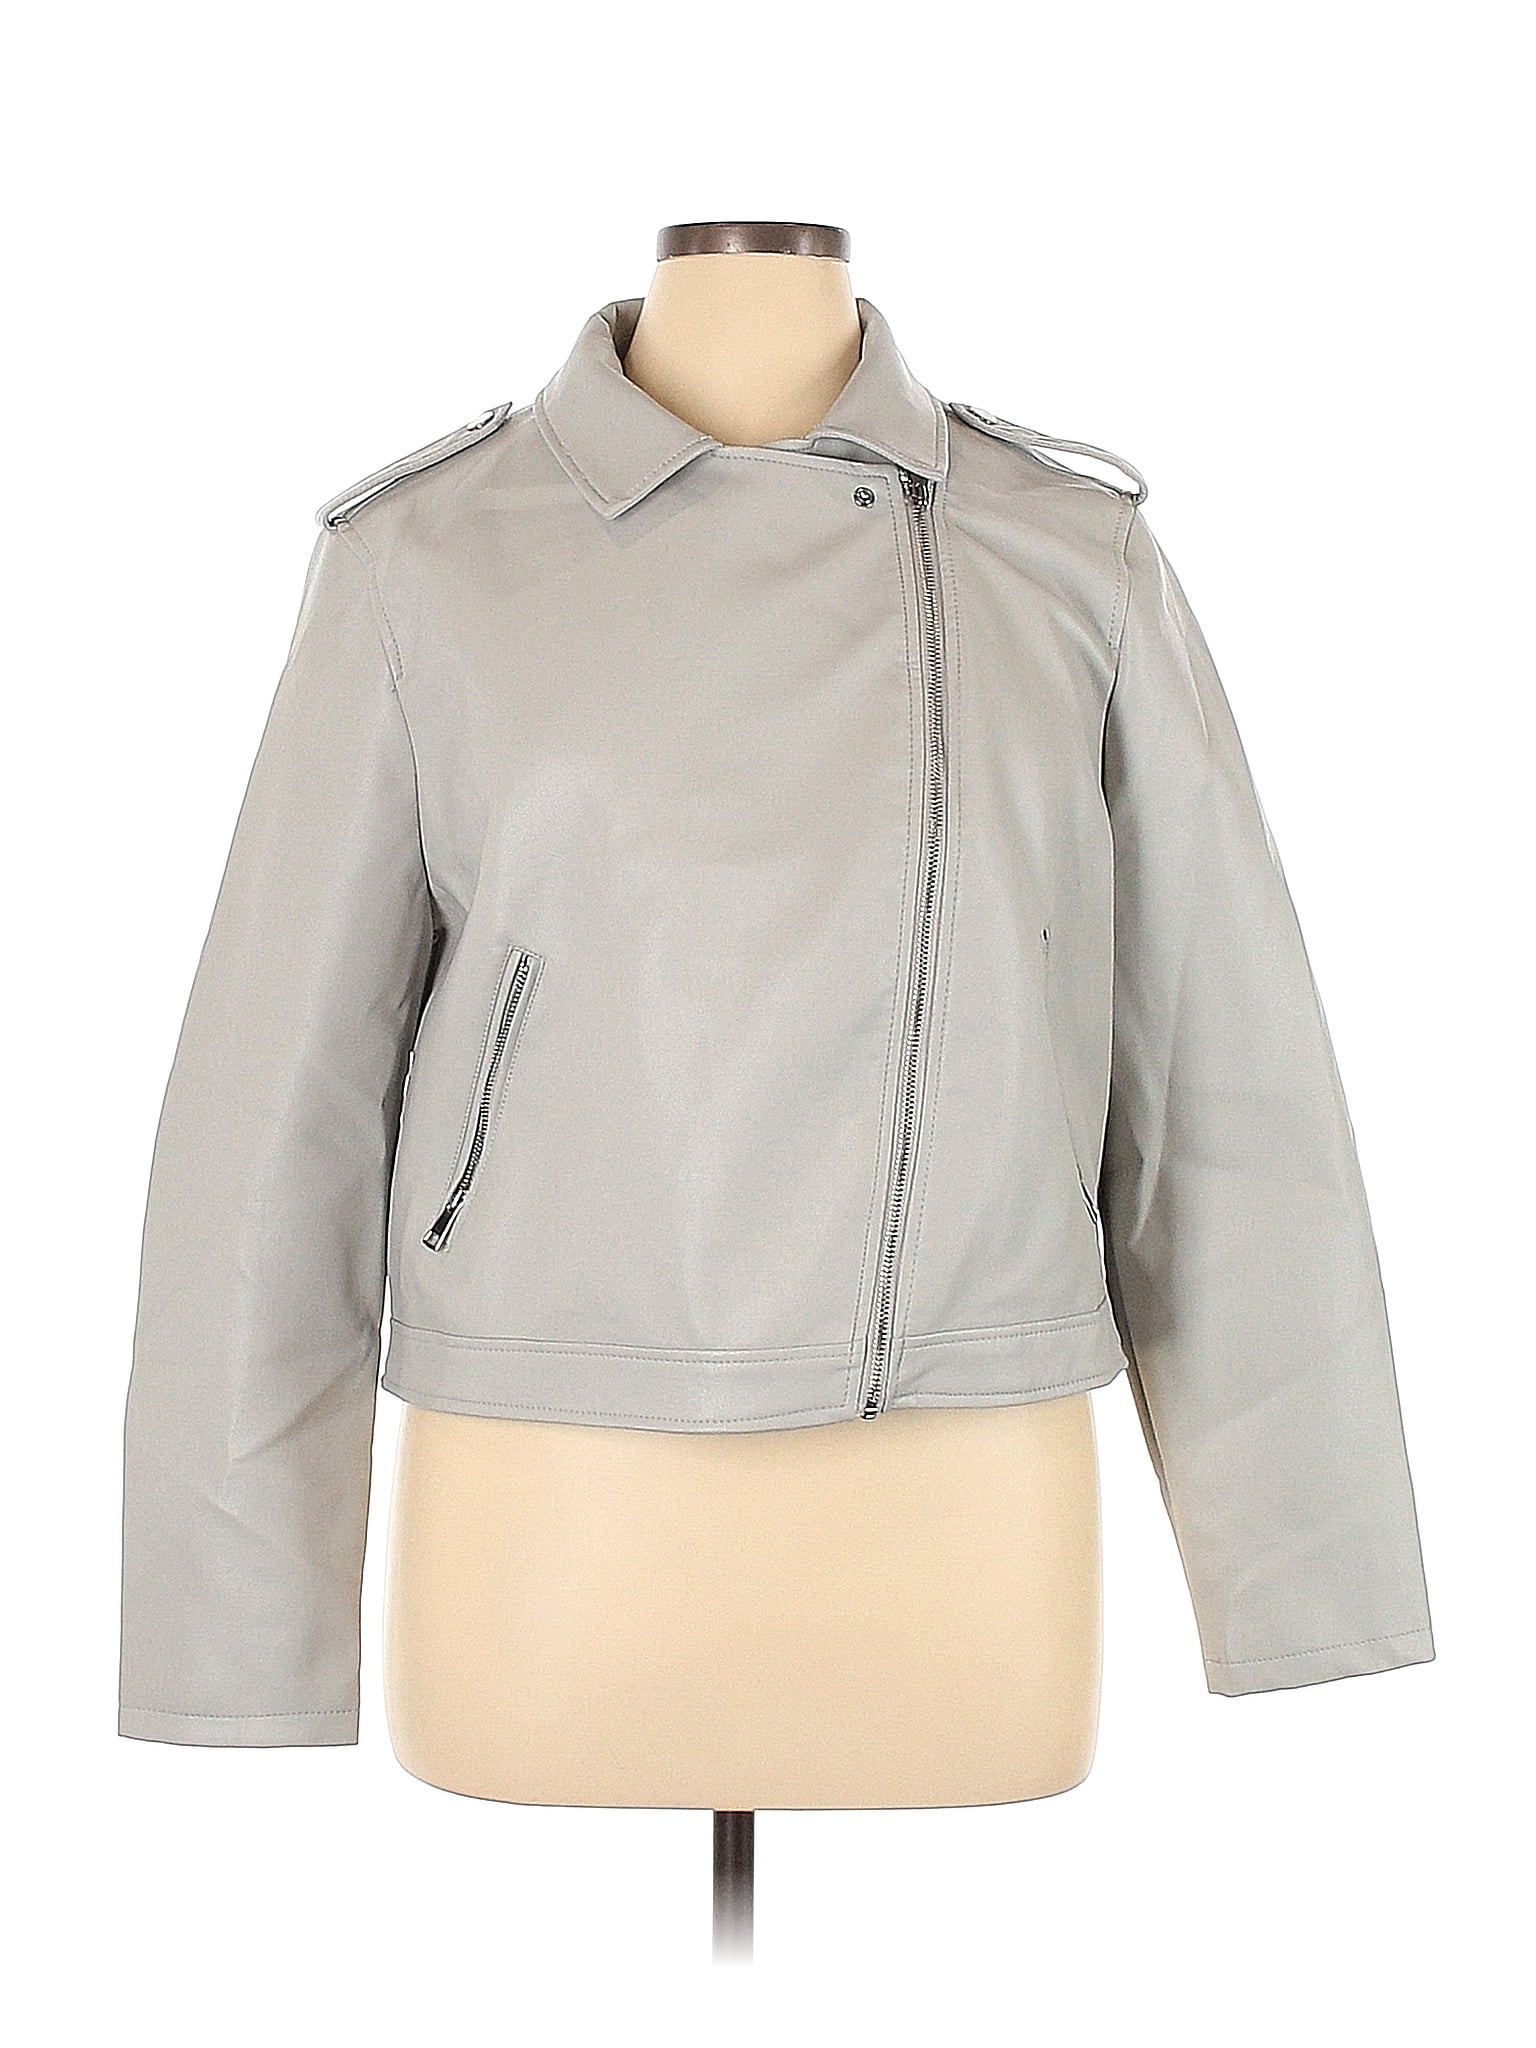 Primark 100% Polyurethane Solid Gray Faux Leather Jacket Size XL - 41% ...